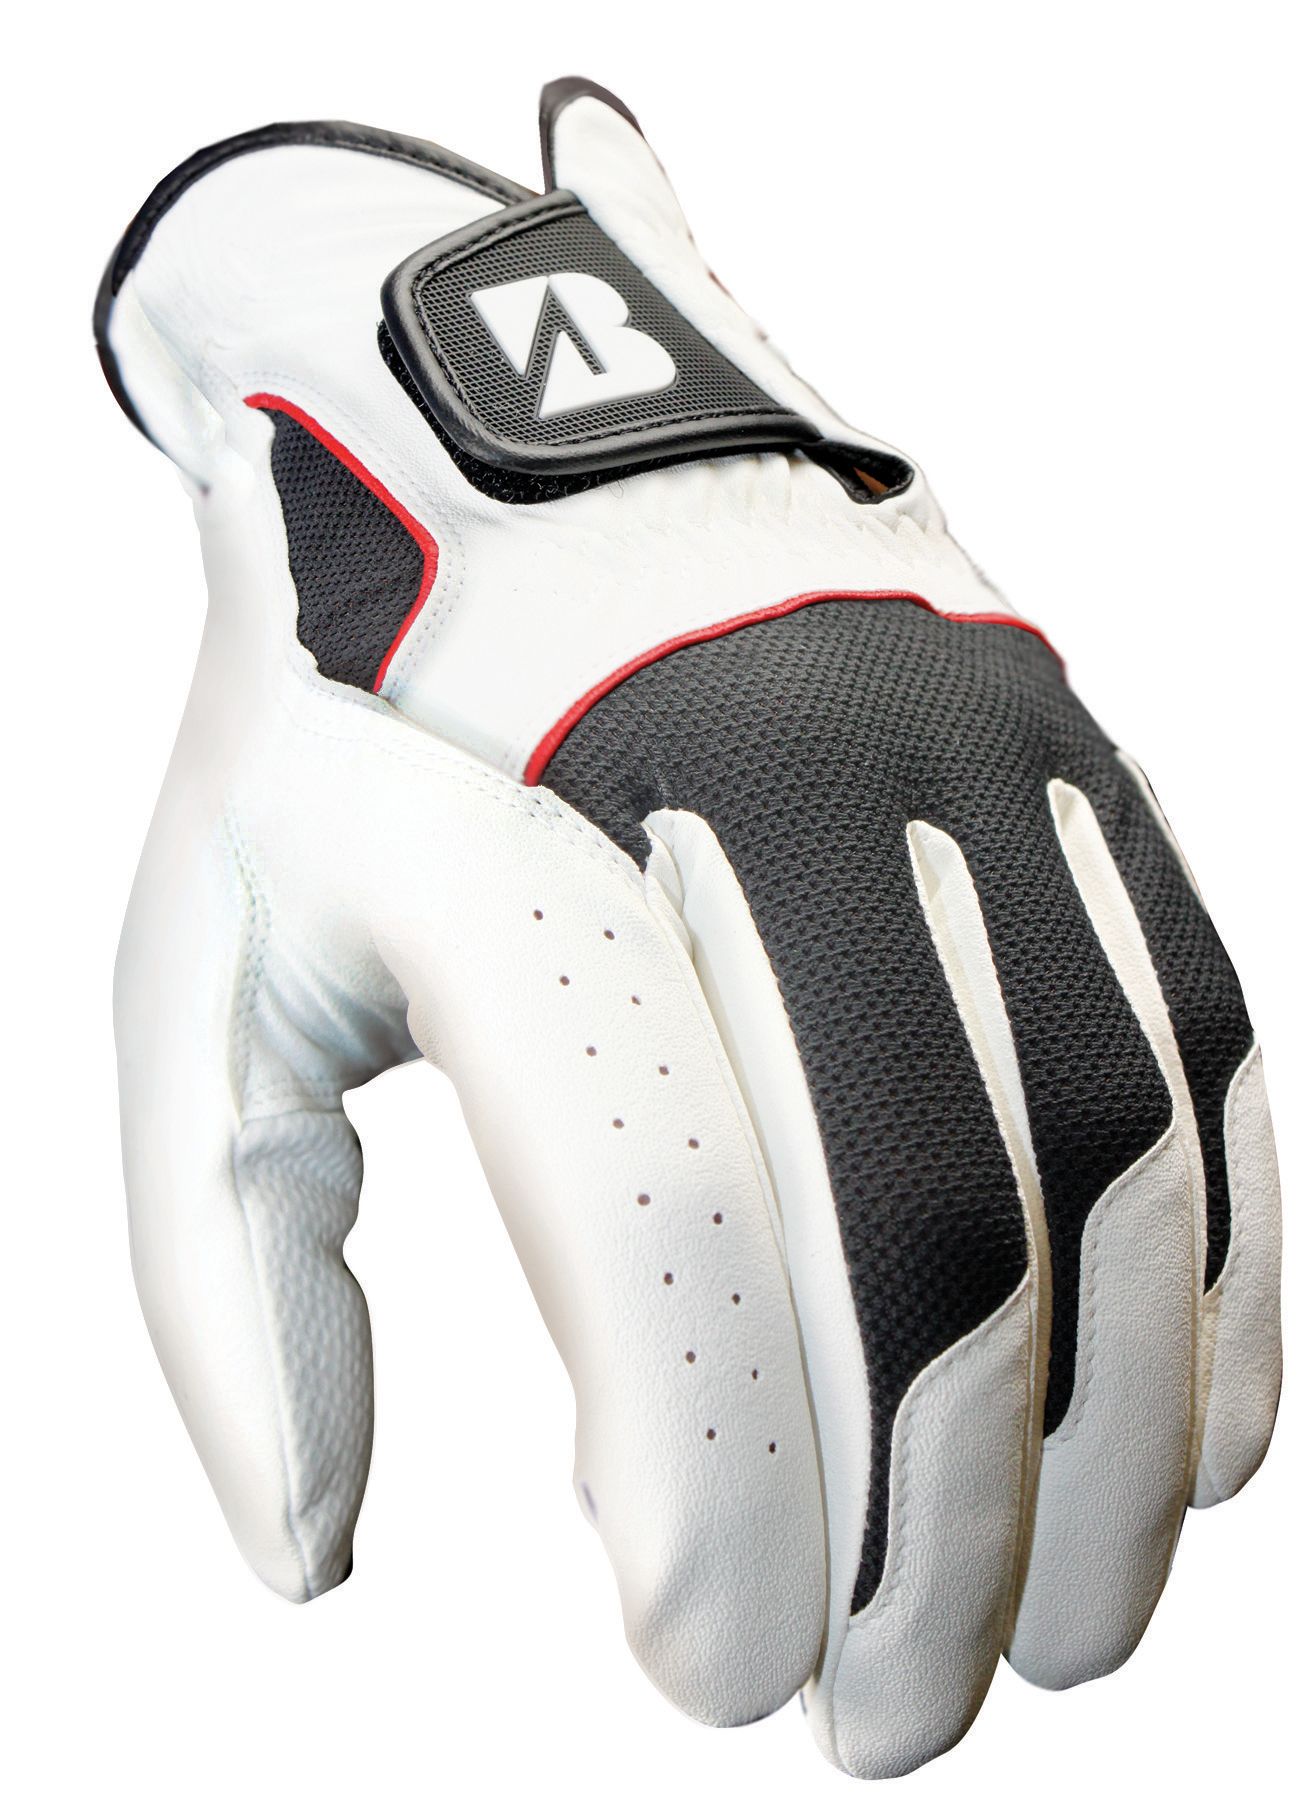 Bridgestone Xfin Glove - Medium